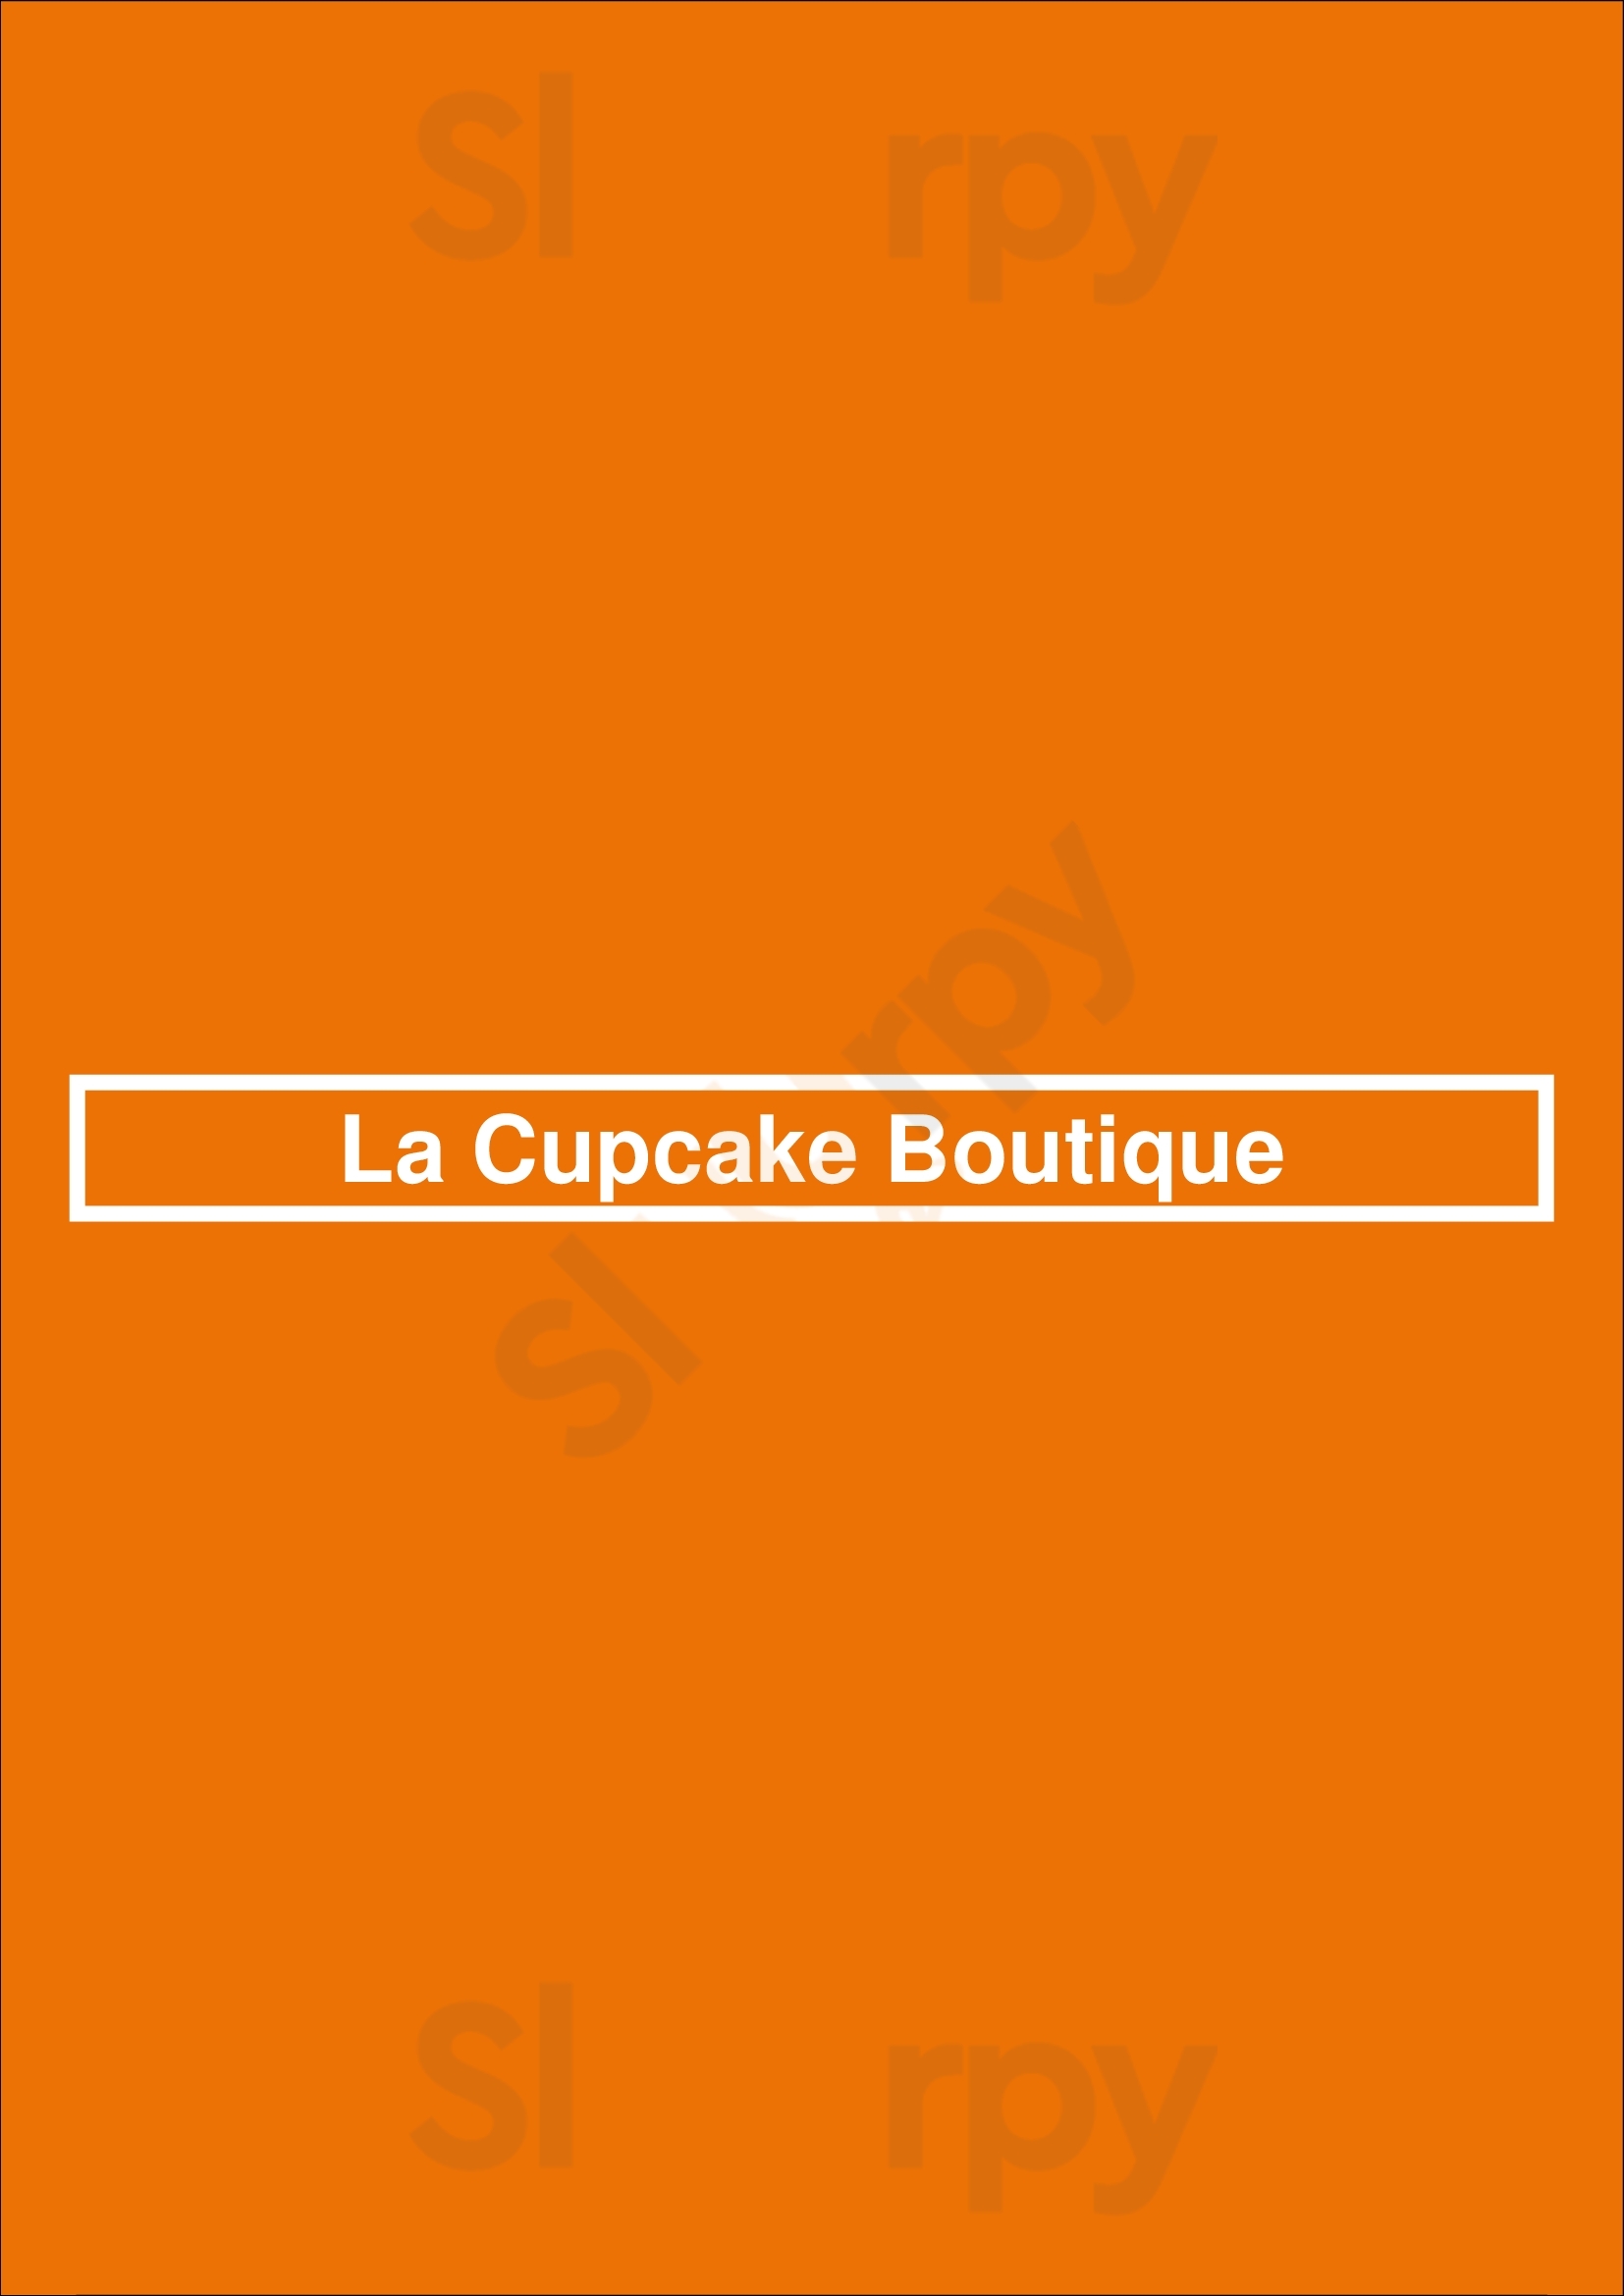 La Cupcake Boutique Burlington Menu - 1